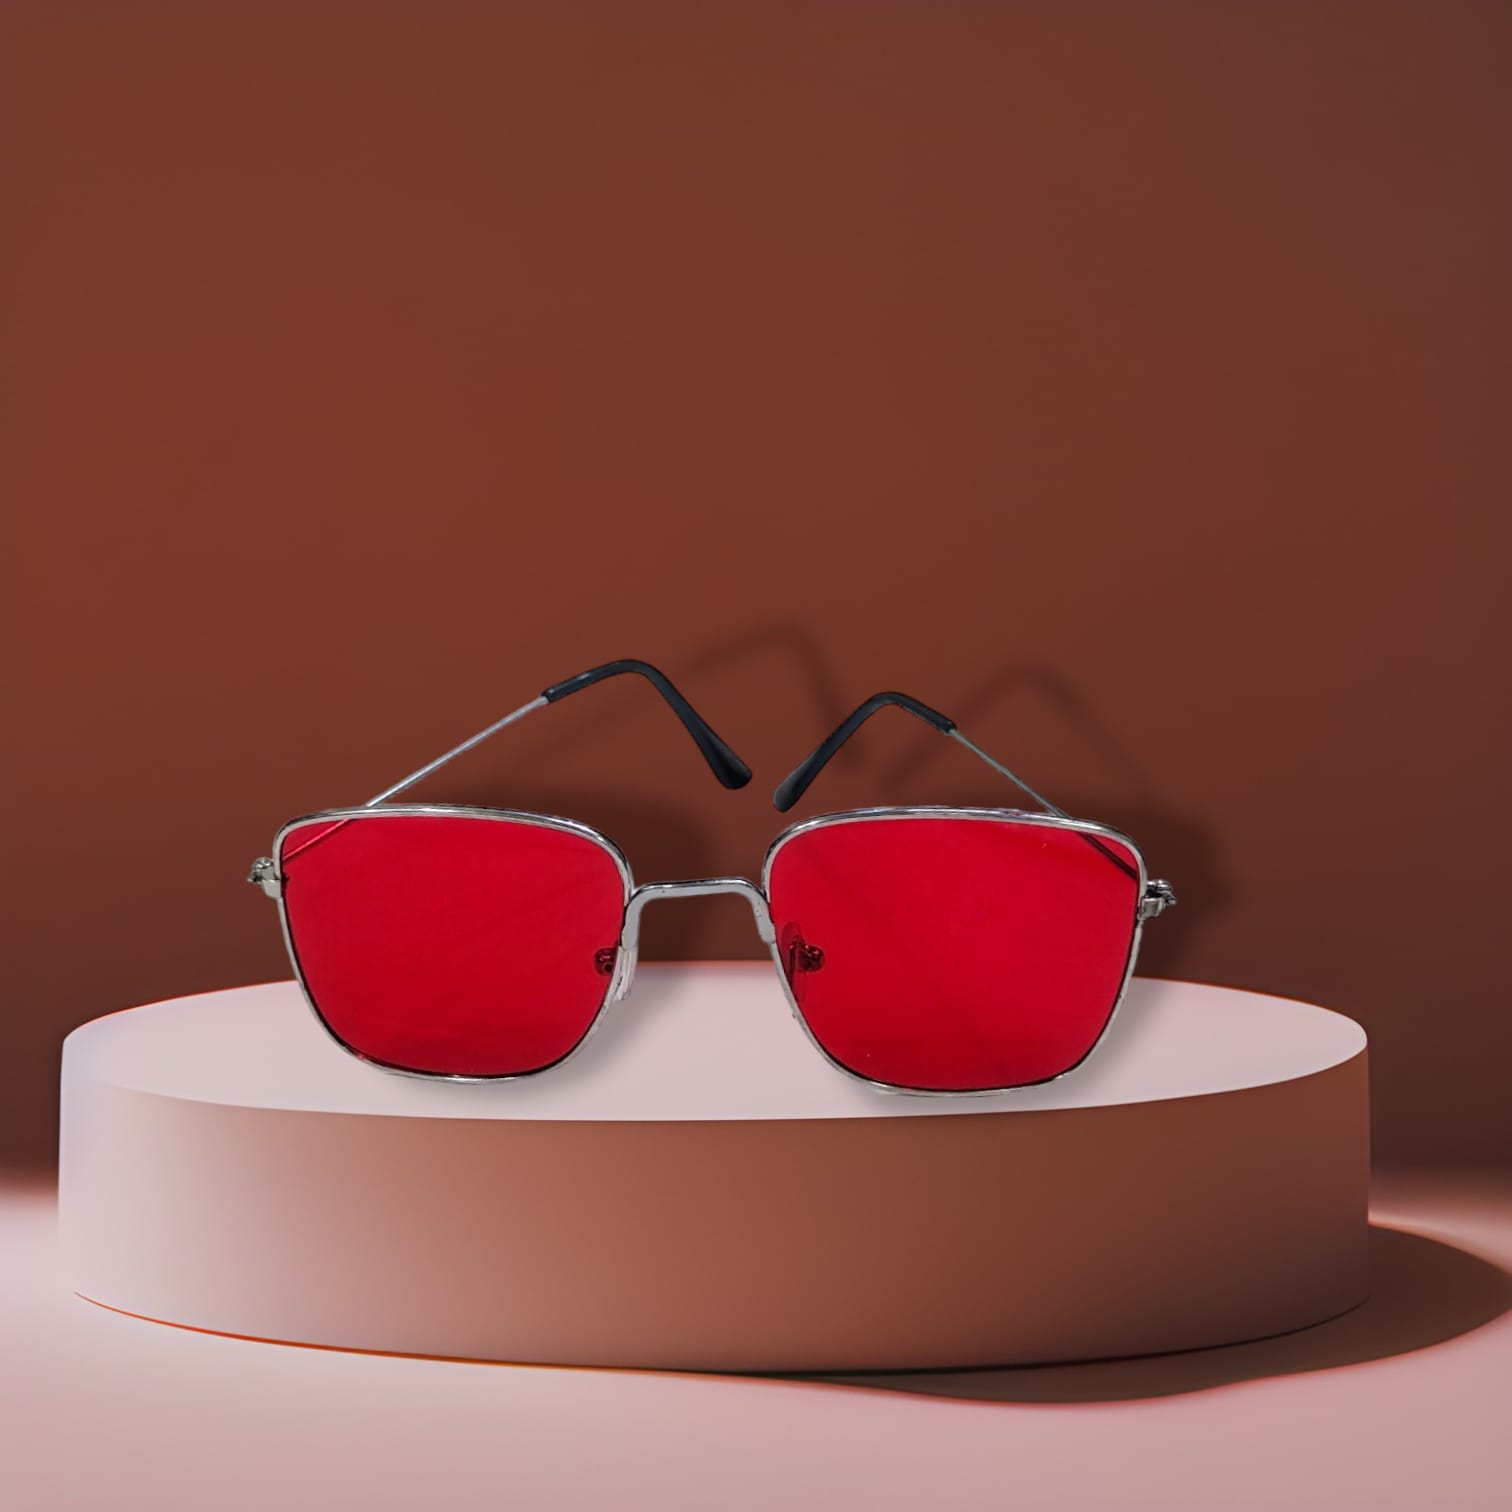 Unisex Sunglasses. Silver Color Metal Frame.